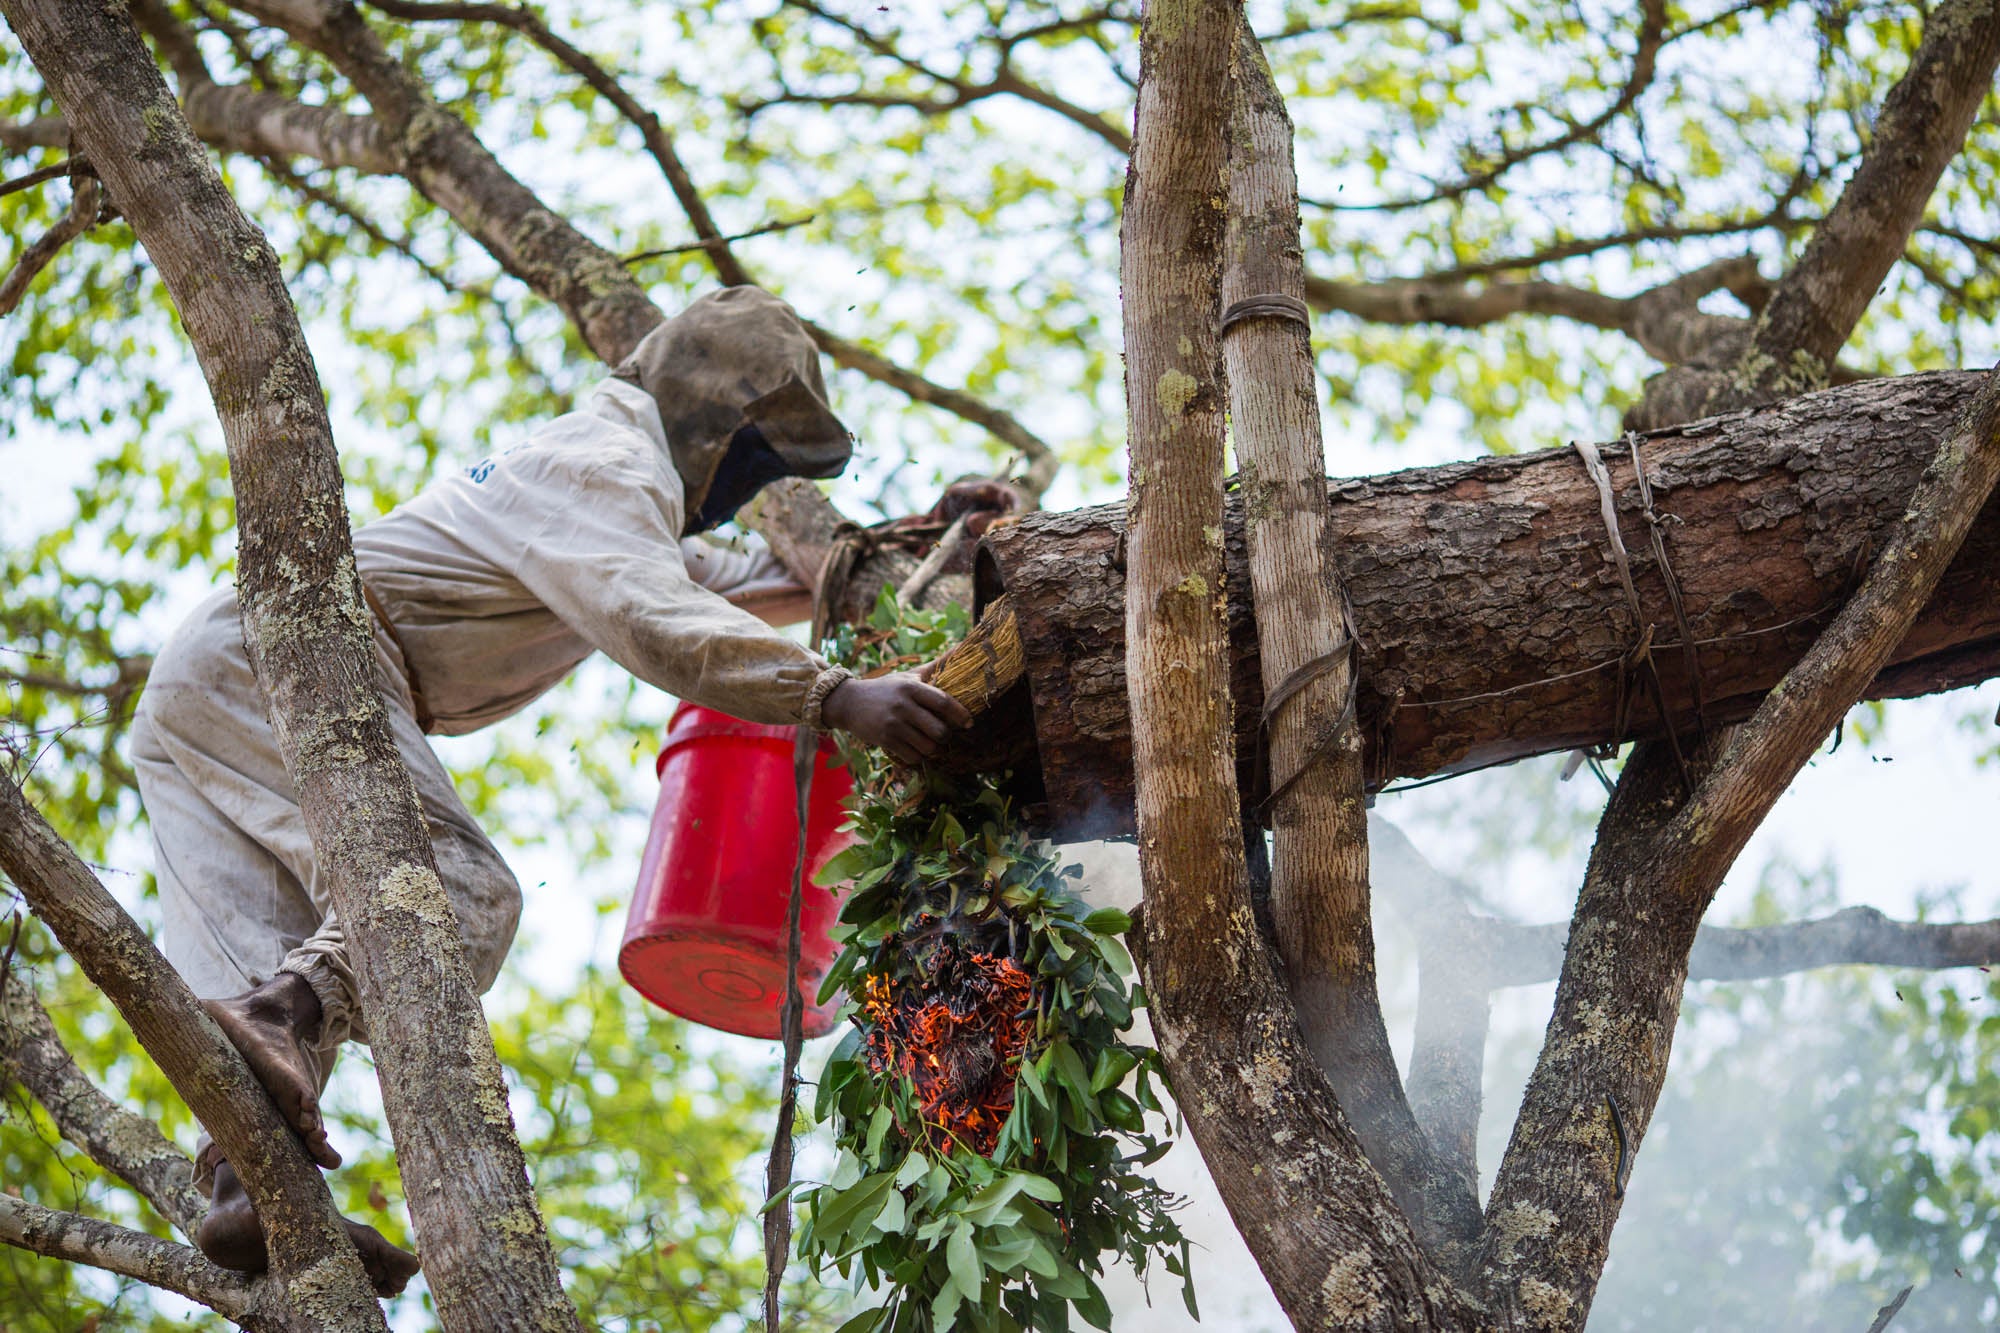 Zambian Beekeeper harvesting Zambeezi Organic, Fair Trade Beeswax and Honey